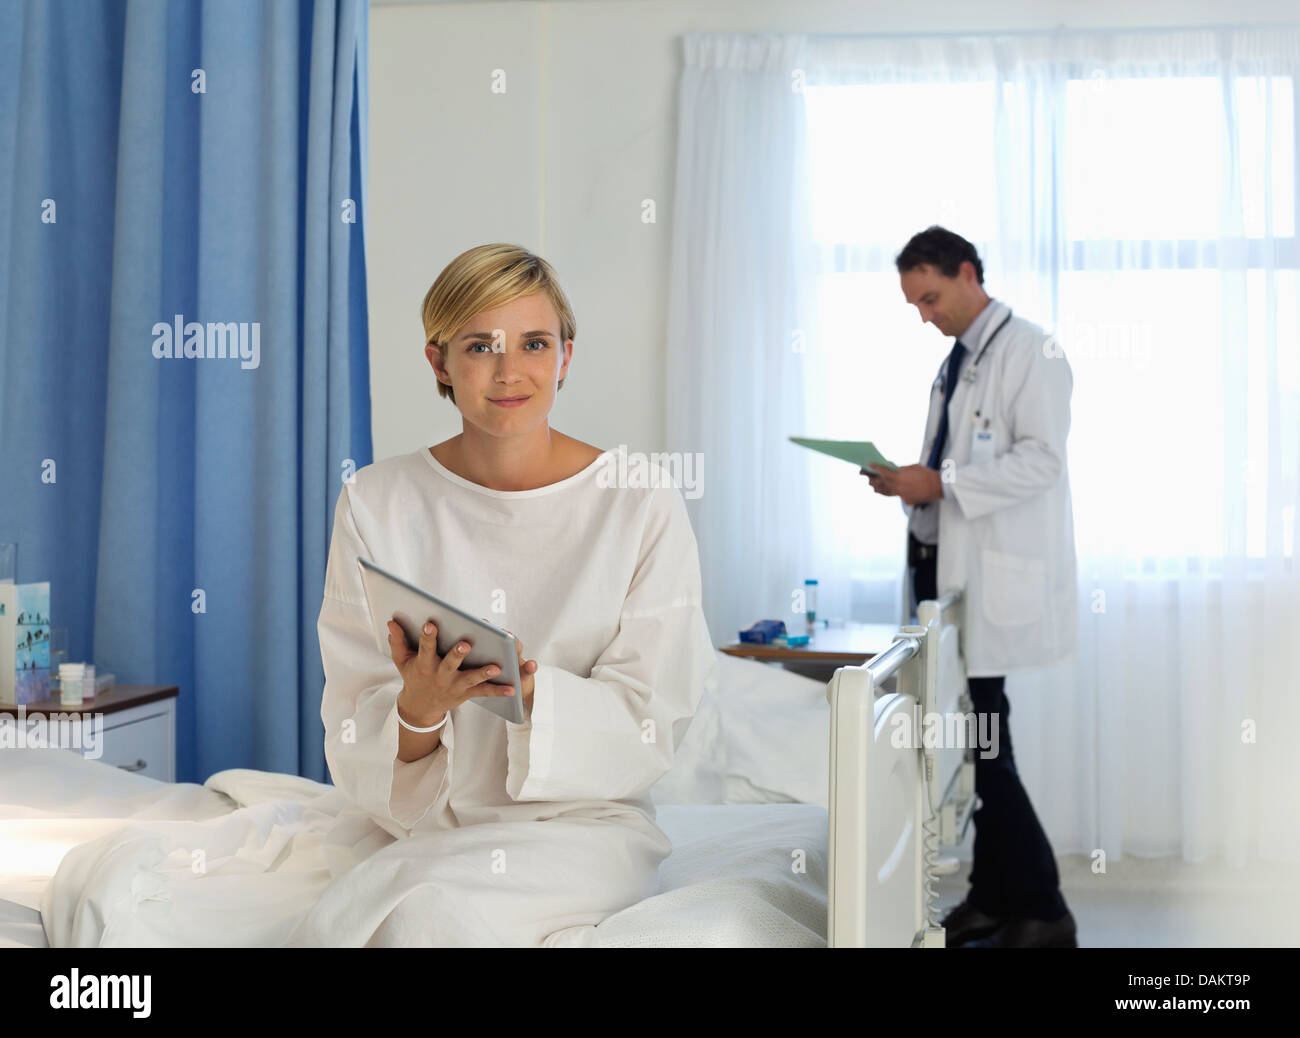 Patienten mit Tablet-Computer im Krankenzimmer Stockfoto